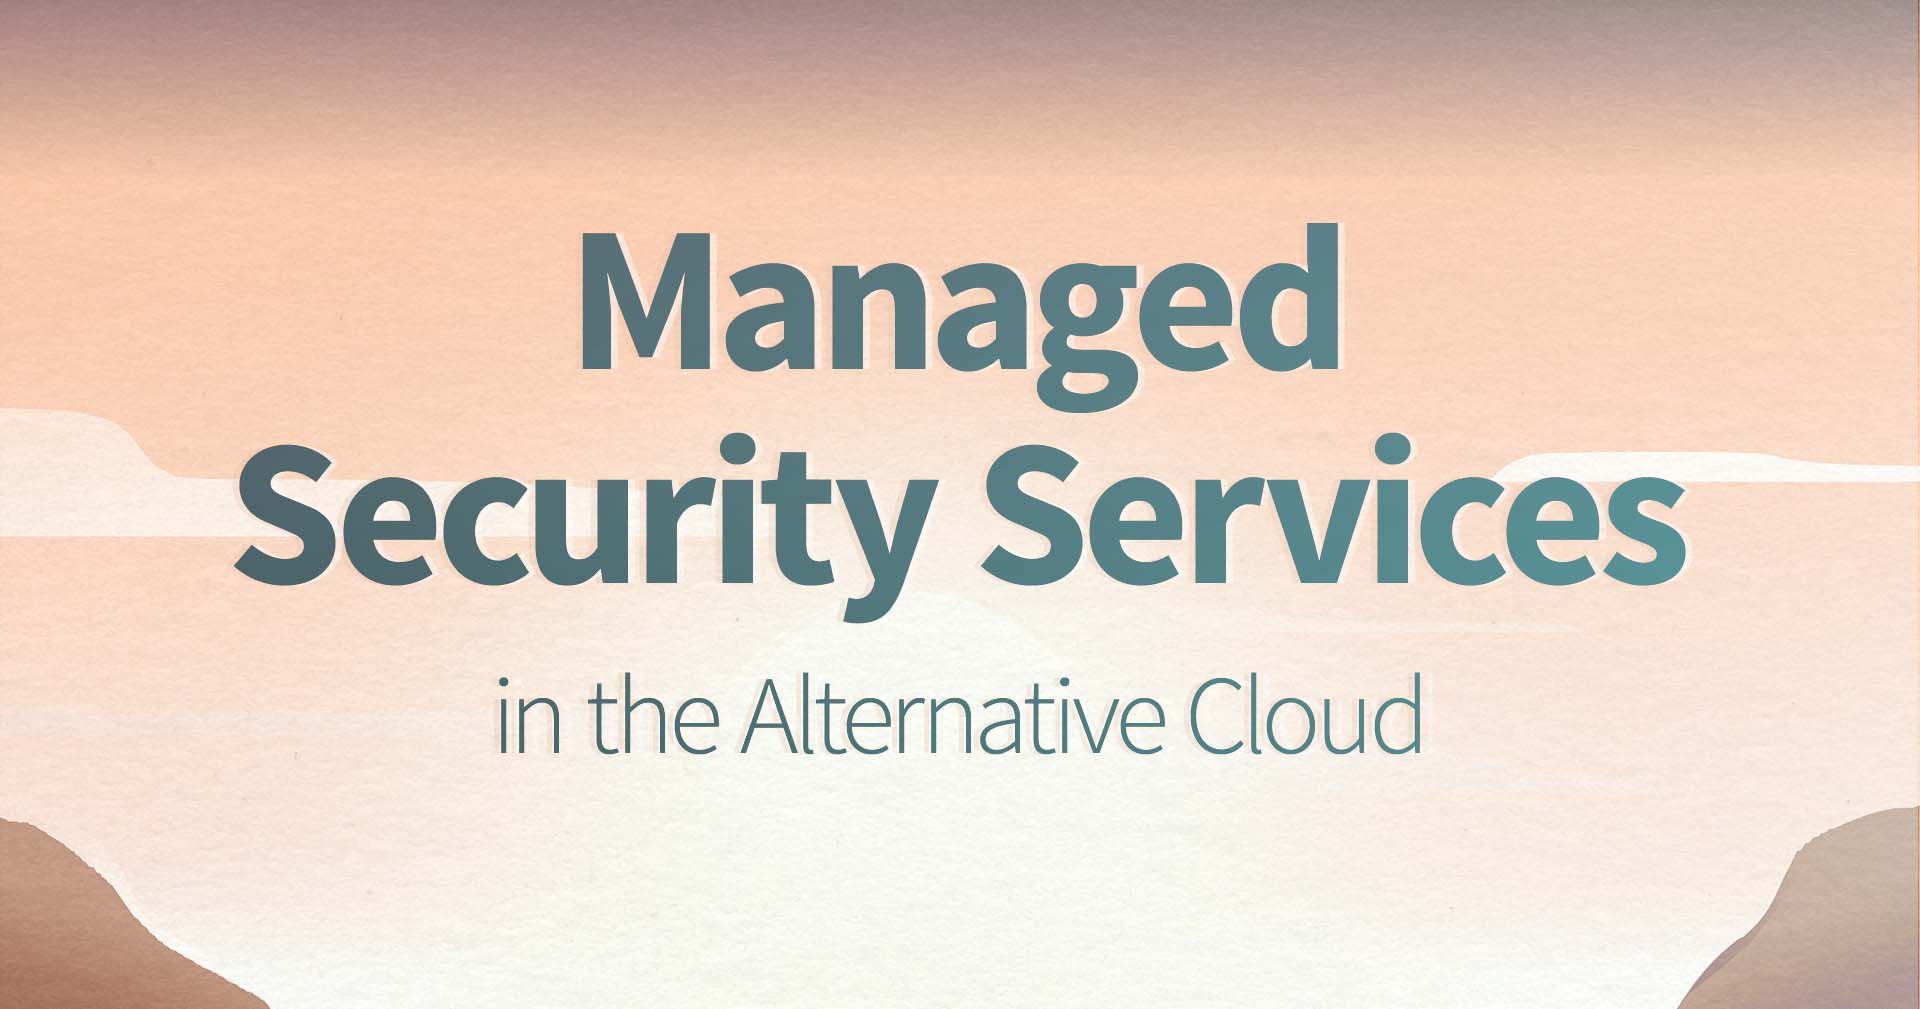 Servizi di sicurezza gestiti nel cloud alternativo